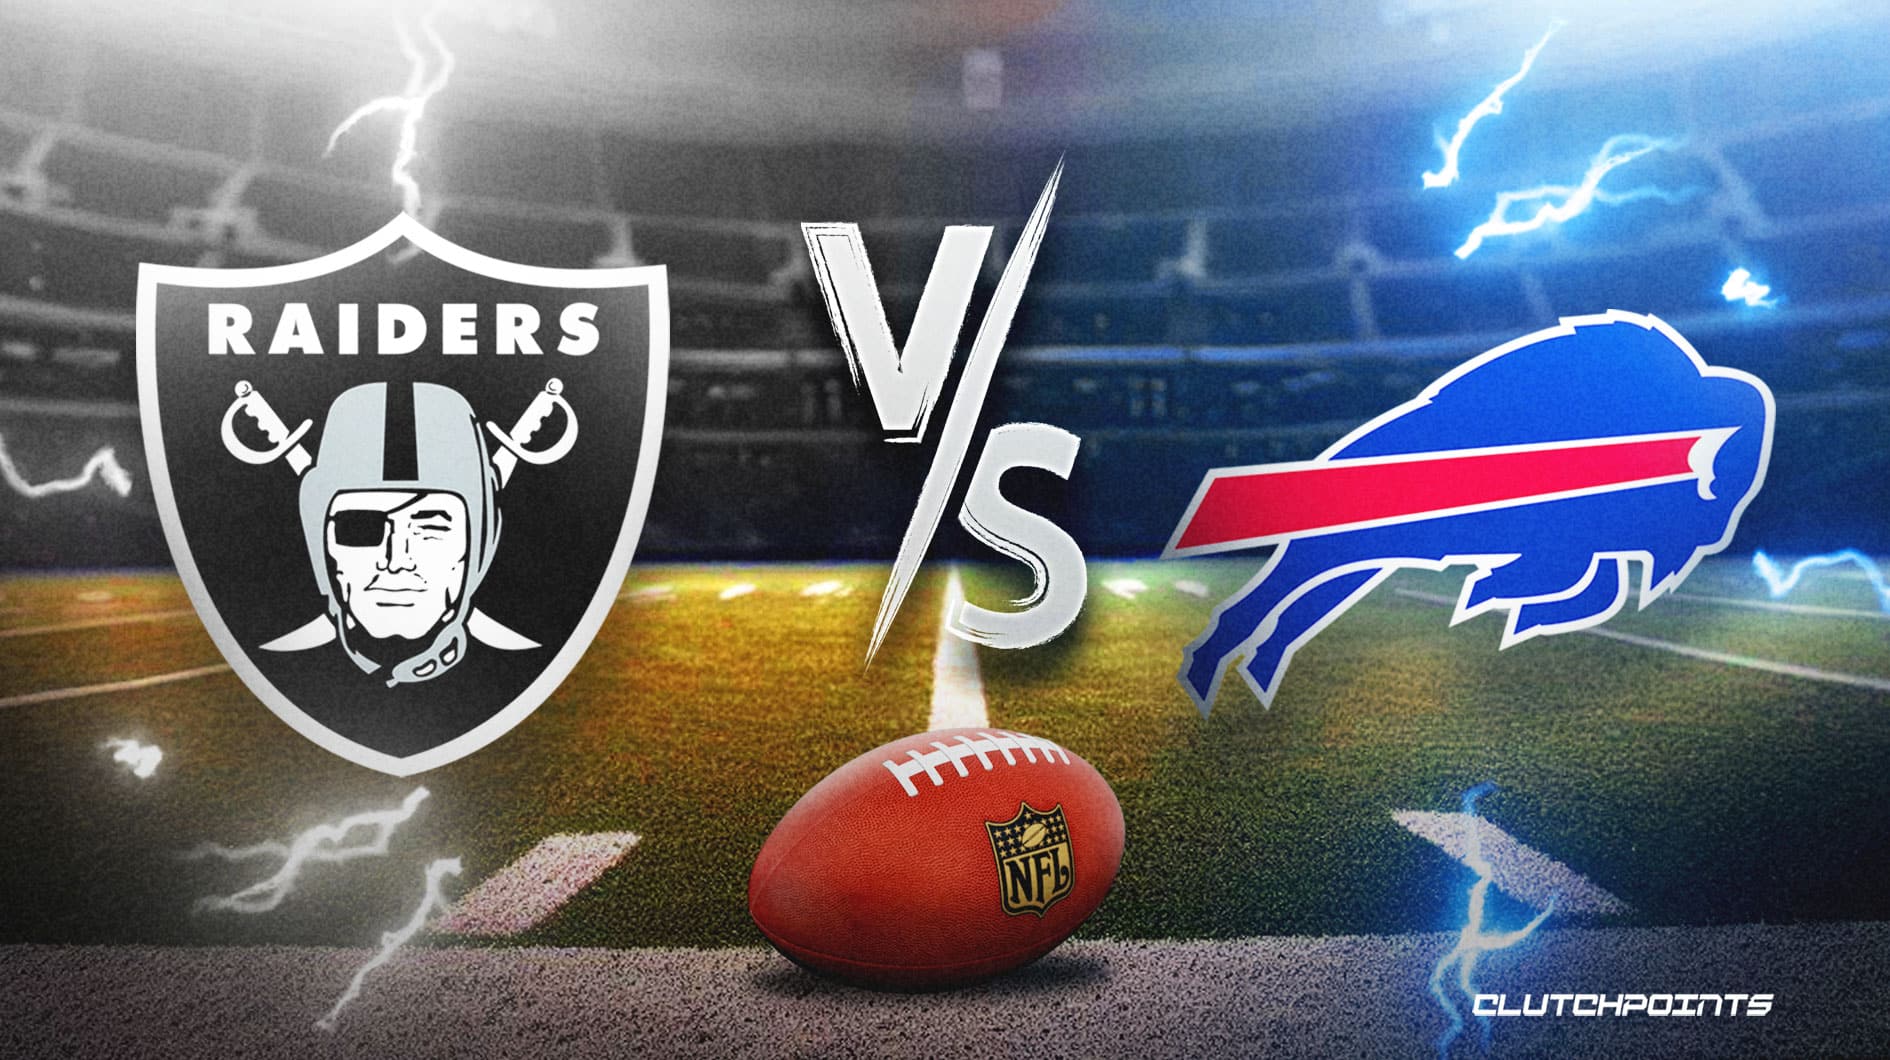 Las Vegas Raiders vs. Buffalo Bills: Date, kick-off time, stream